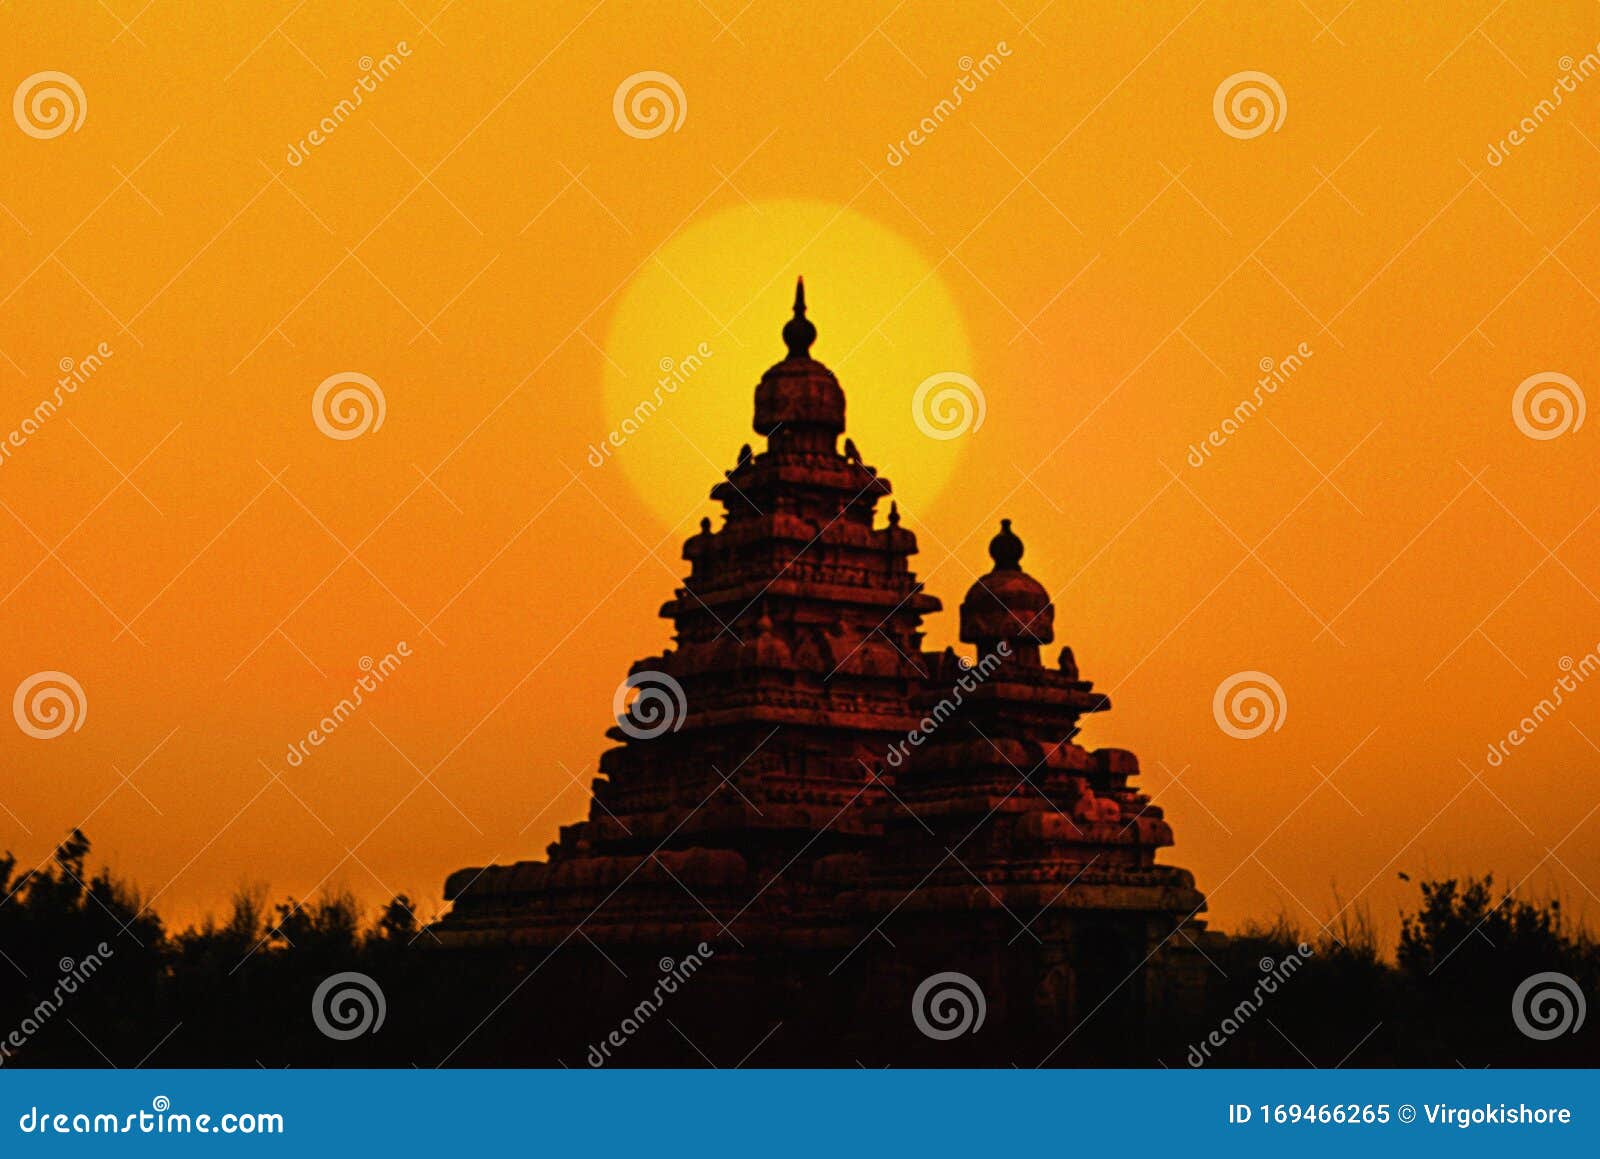 mahabalipuram shore temple, chennai india